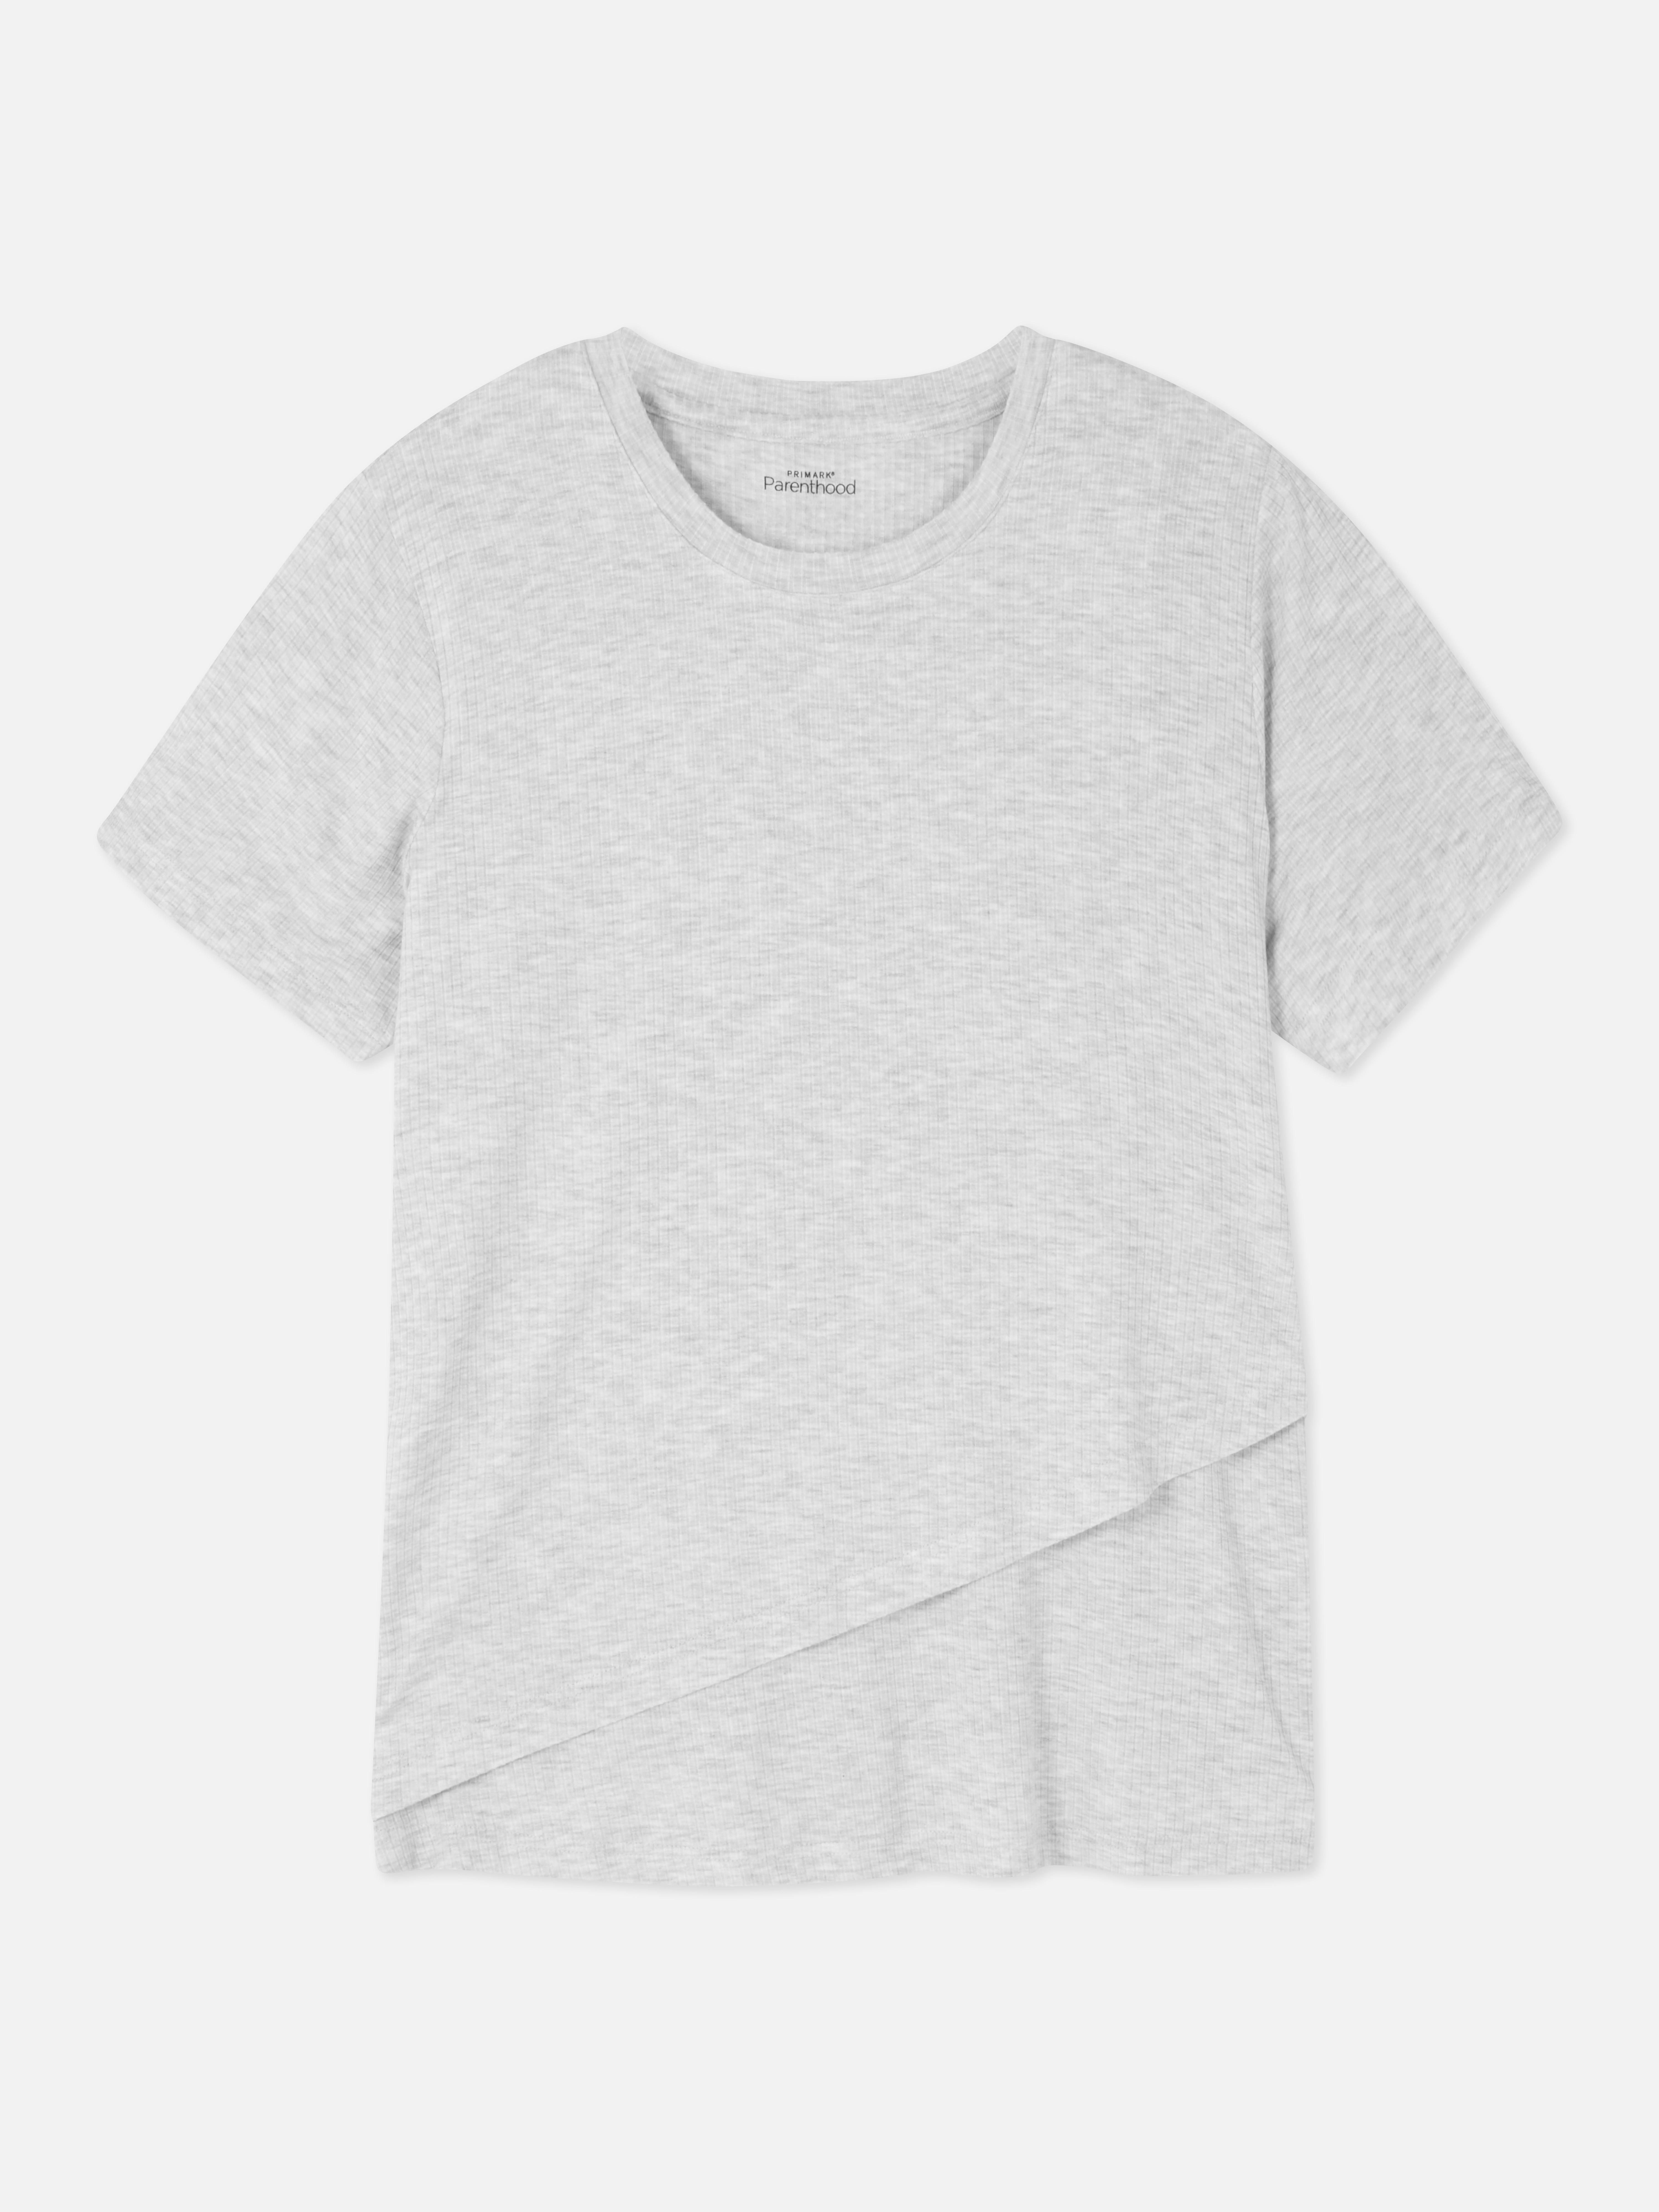 Rabatt 73 % KINDER Hemden & T-Shirts Rüschen Primark T-Shirt Rosa 